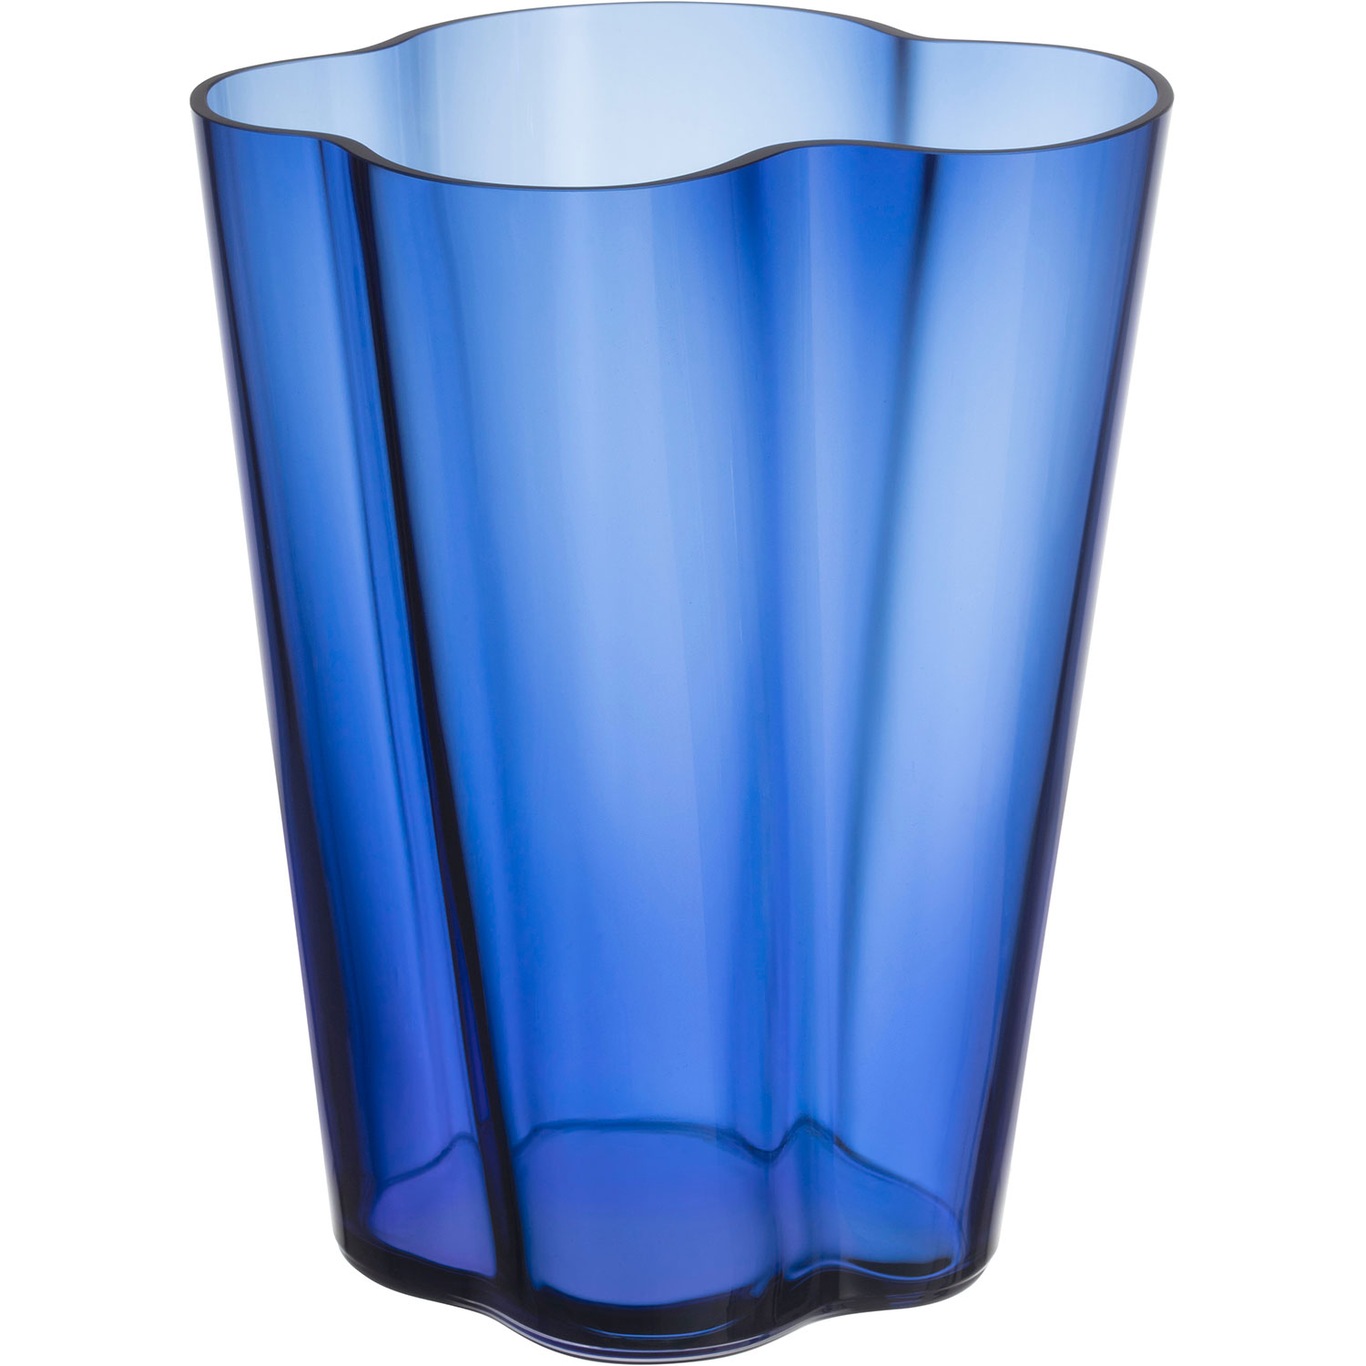 Aalto vase 270mm ultramarin blue